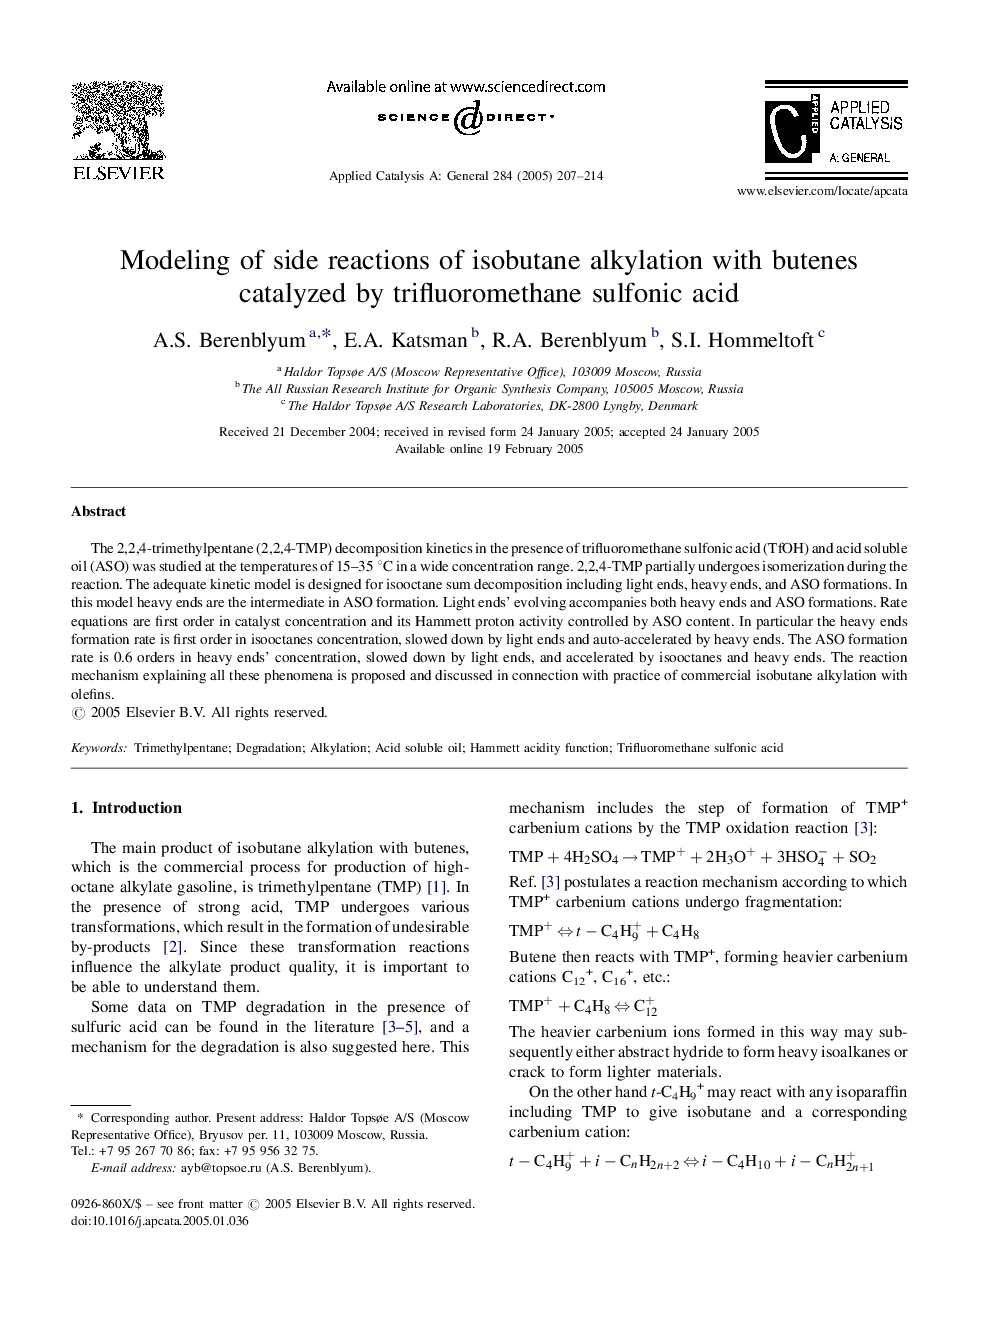 Modeling of side reactions of isobutane alkylation with butenes catalyzed by trifluoromethane sulfonic acid